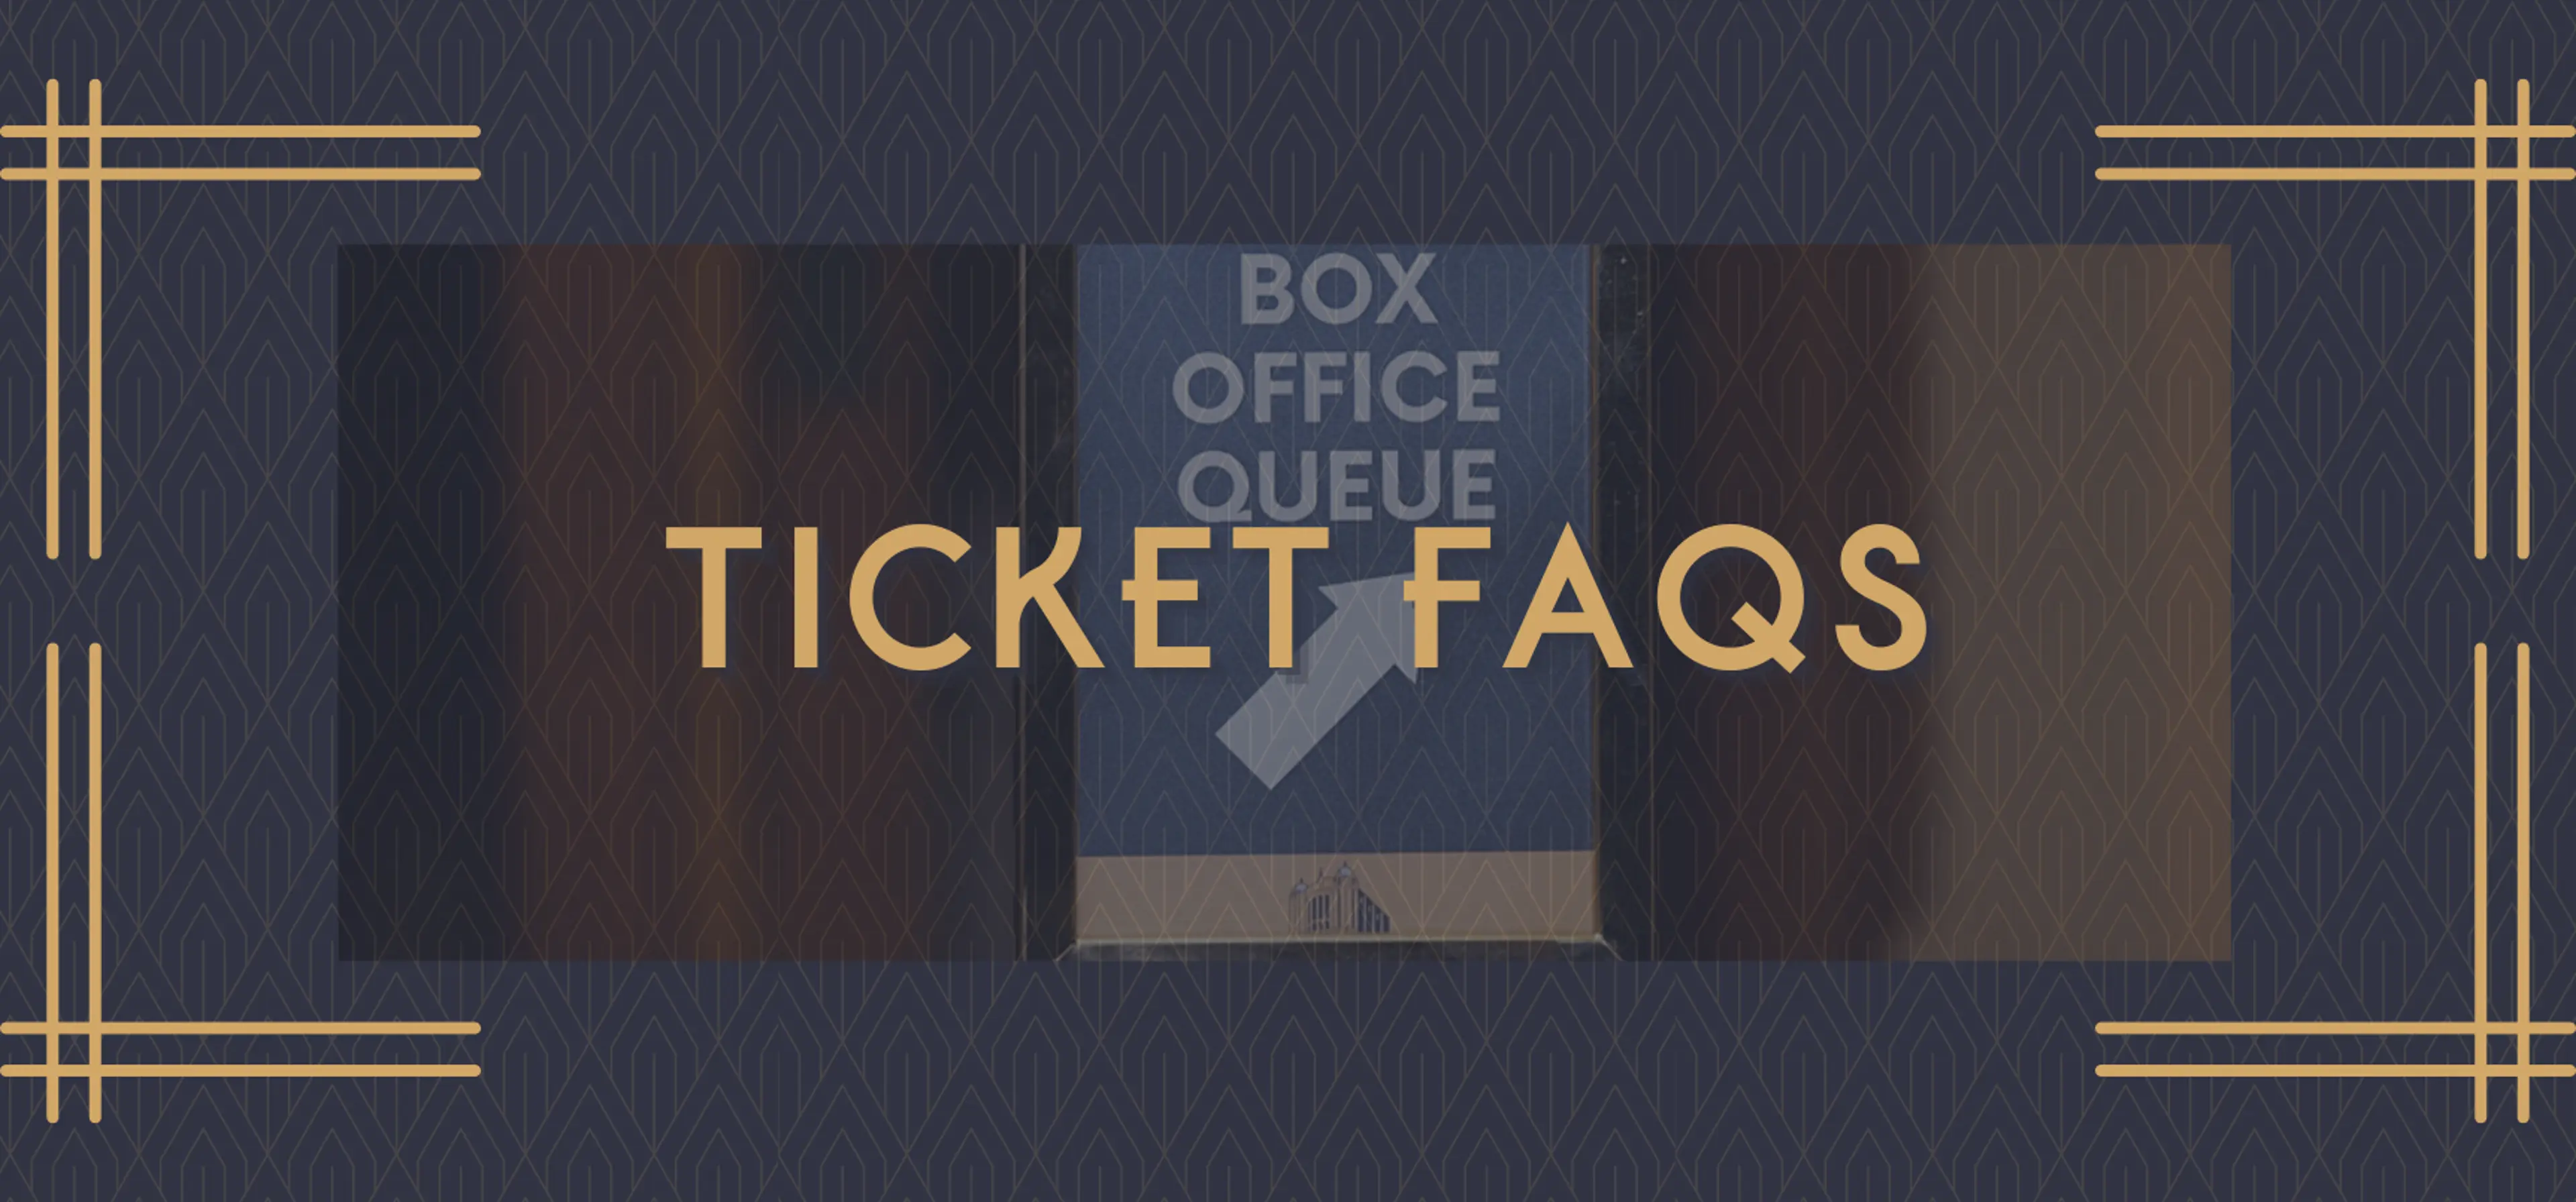 Ticket FAQS